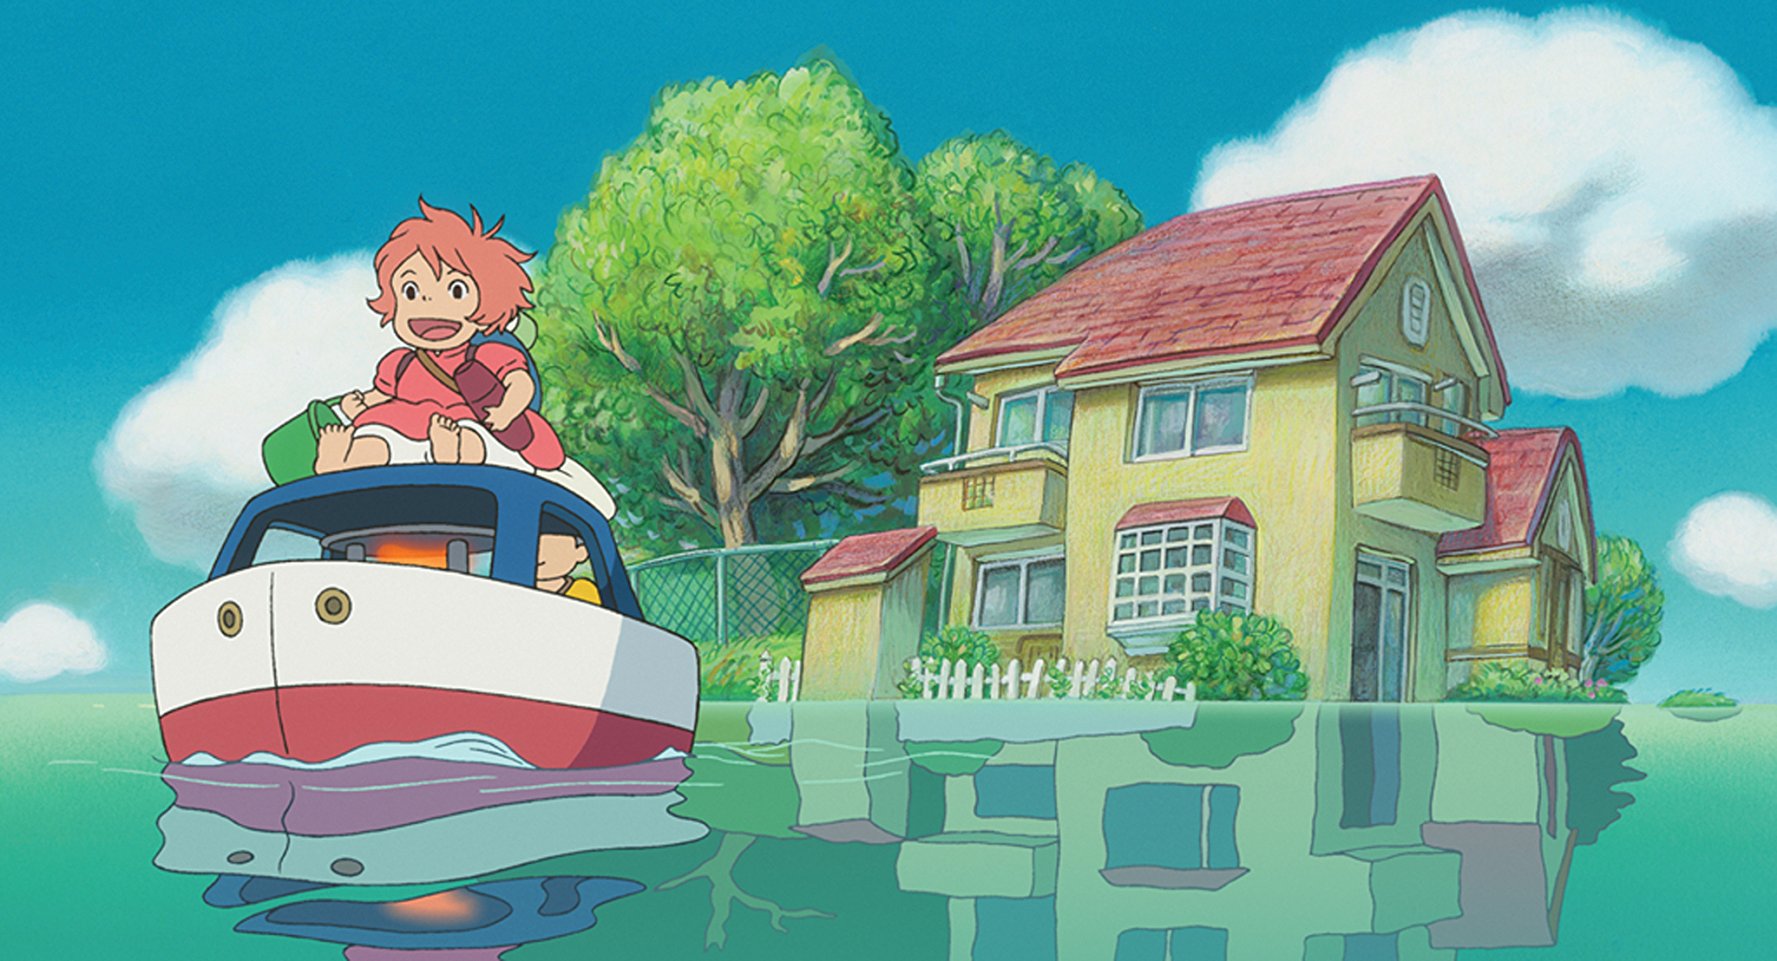 Studio Ghibli's Ponyo Celebrates 10th Anniversary in Theaters